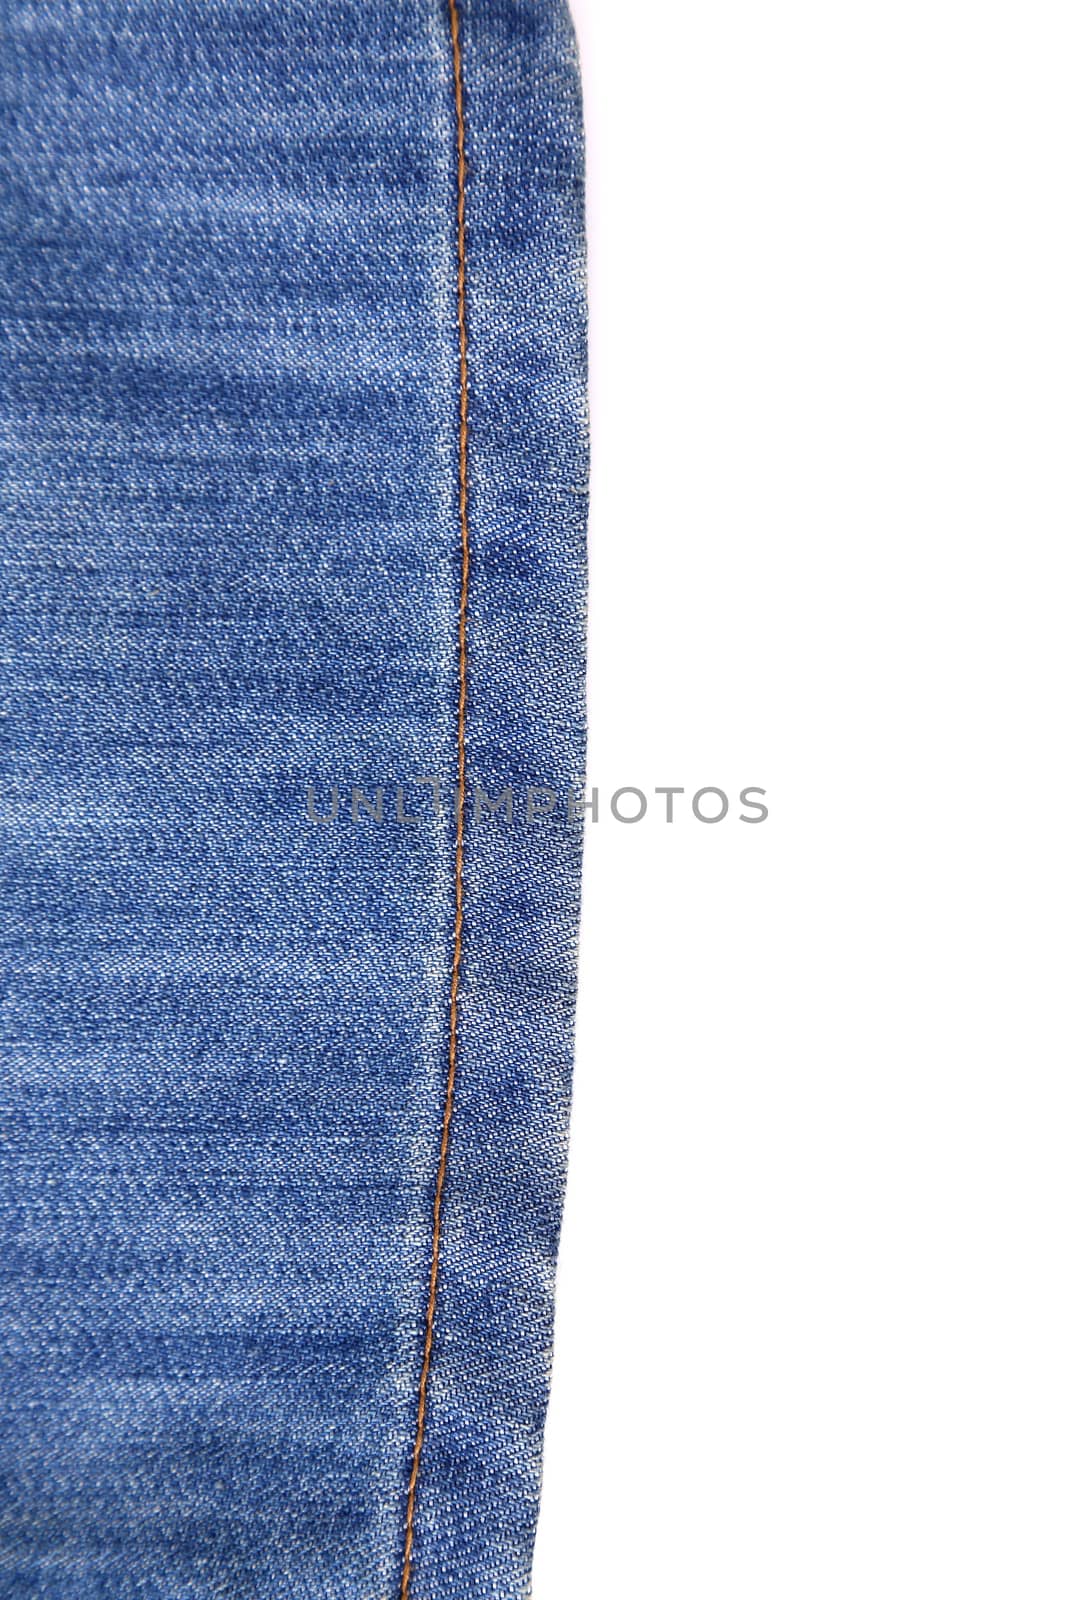 Wrinkled blue jean frame by indigolotos